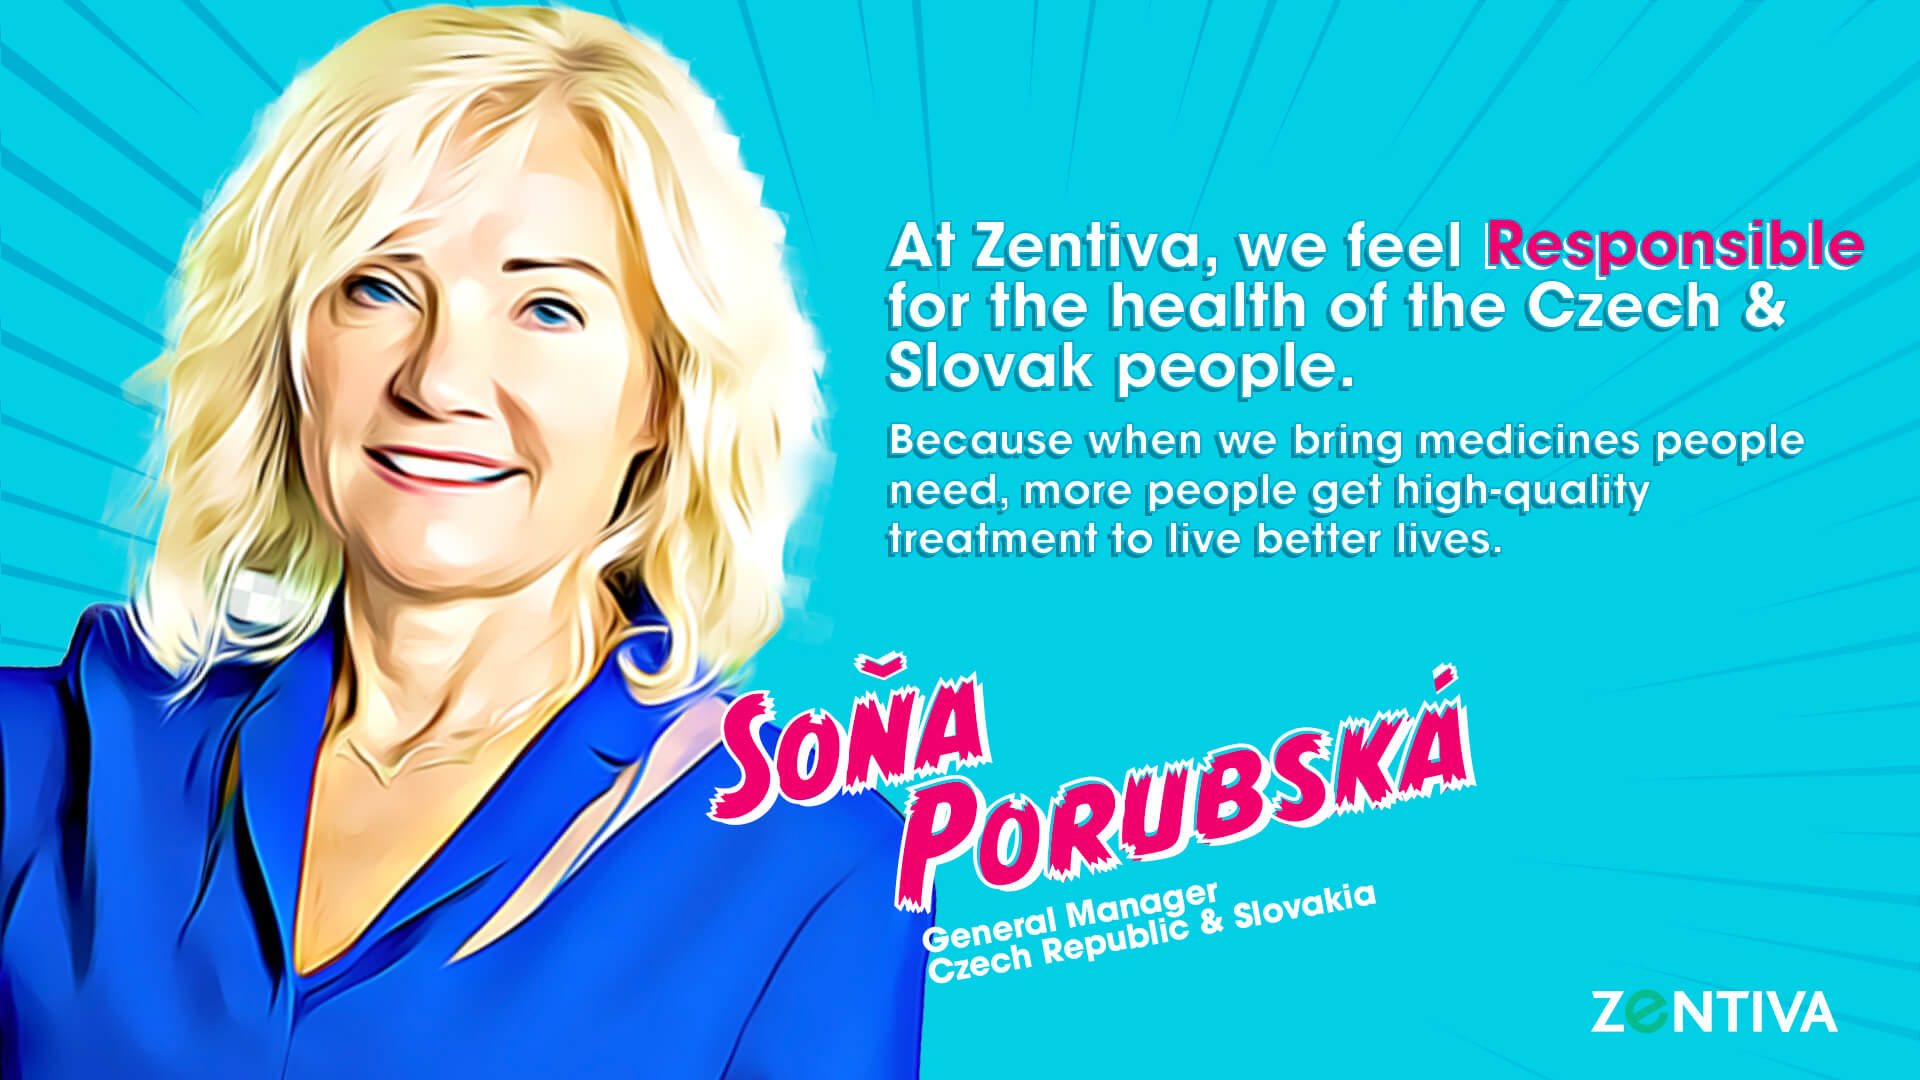 Zentiva SuperpowerZ with Sona Porubska, General Manager Czech Republic & Slovakia at Zentiva